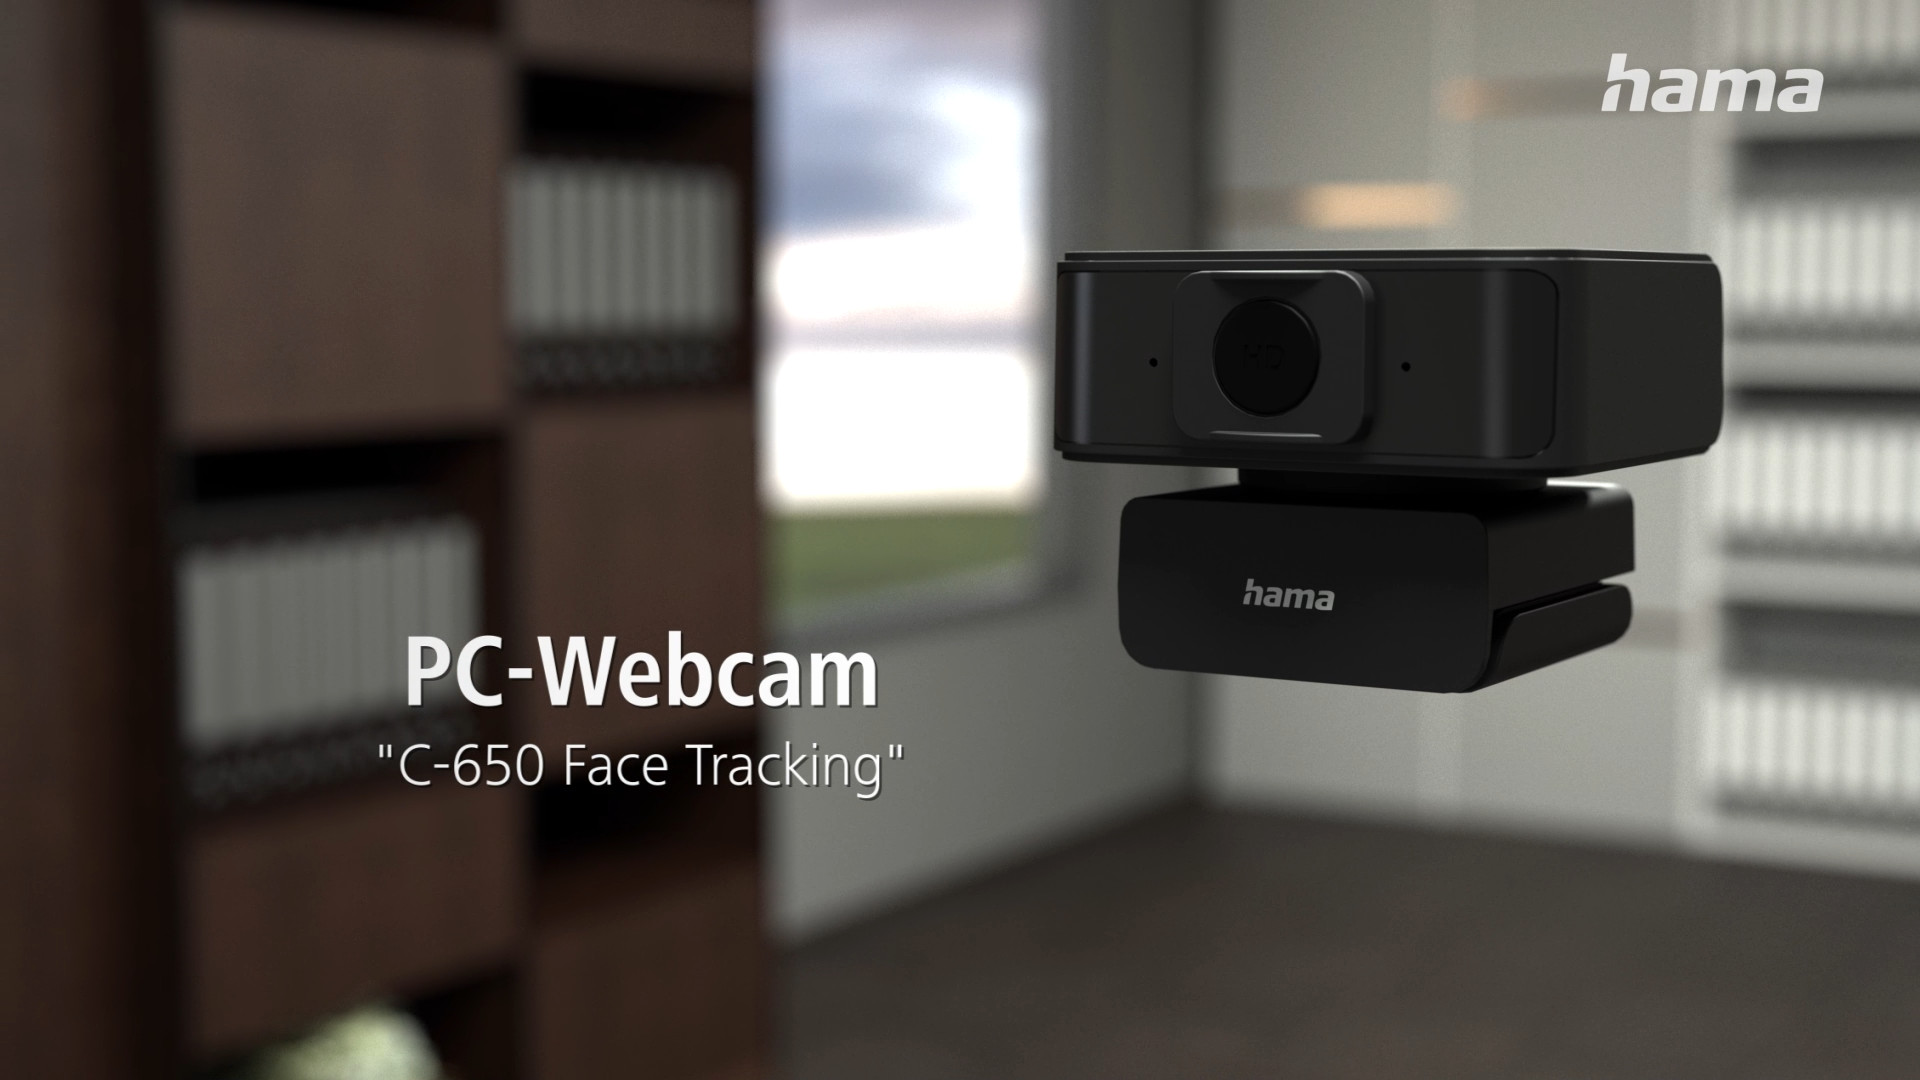 Hama "C-650 Face Tracking" PC Webcam